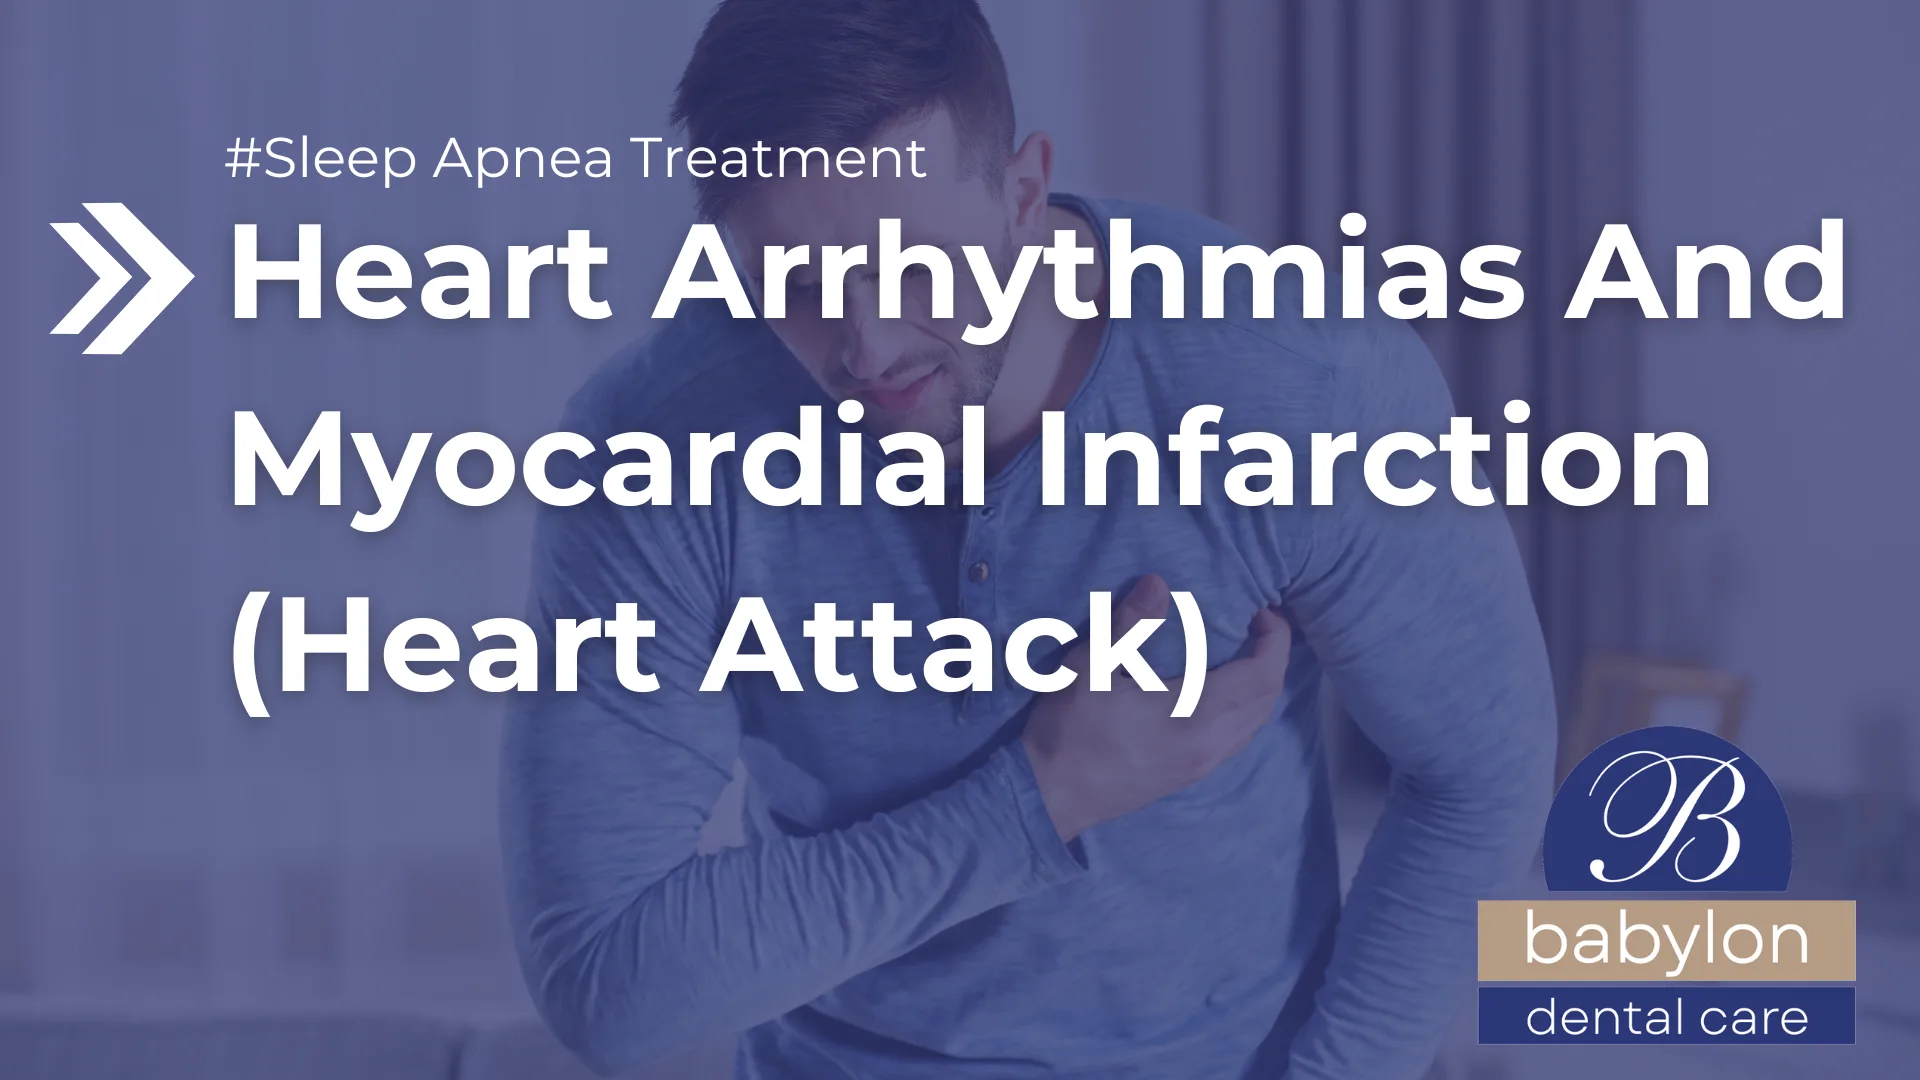 Heart Arrhythmias And Myocardial Infarction (Heart Attack) Image - new logo